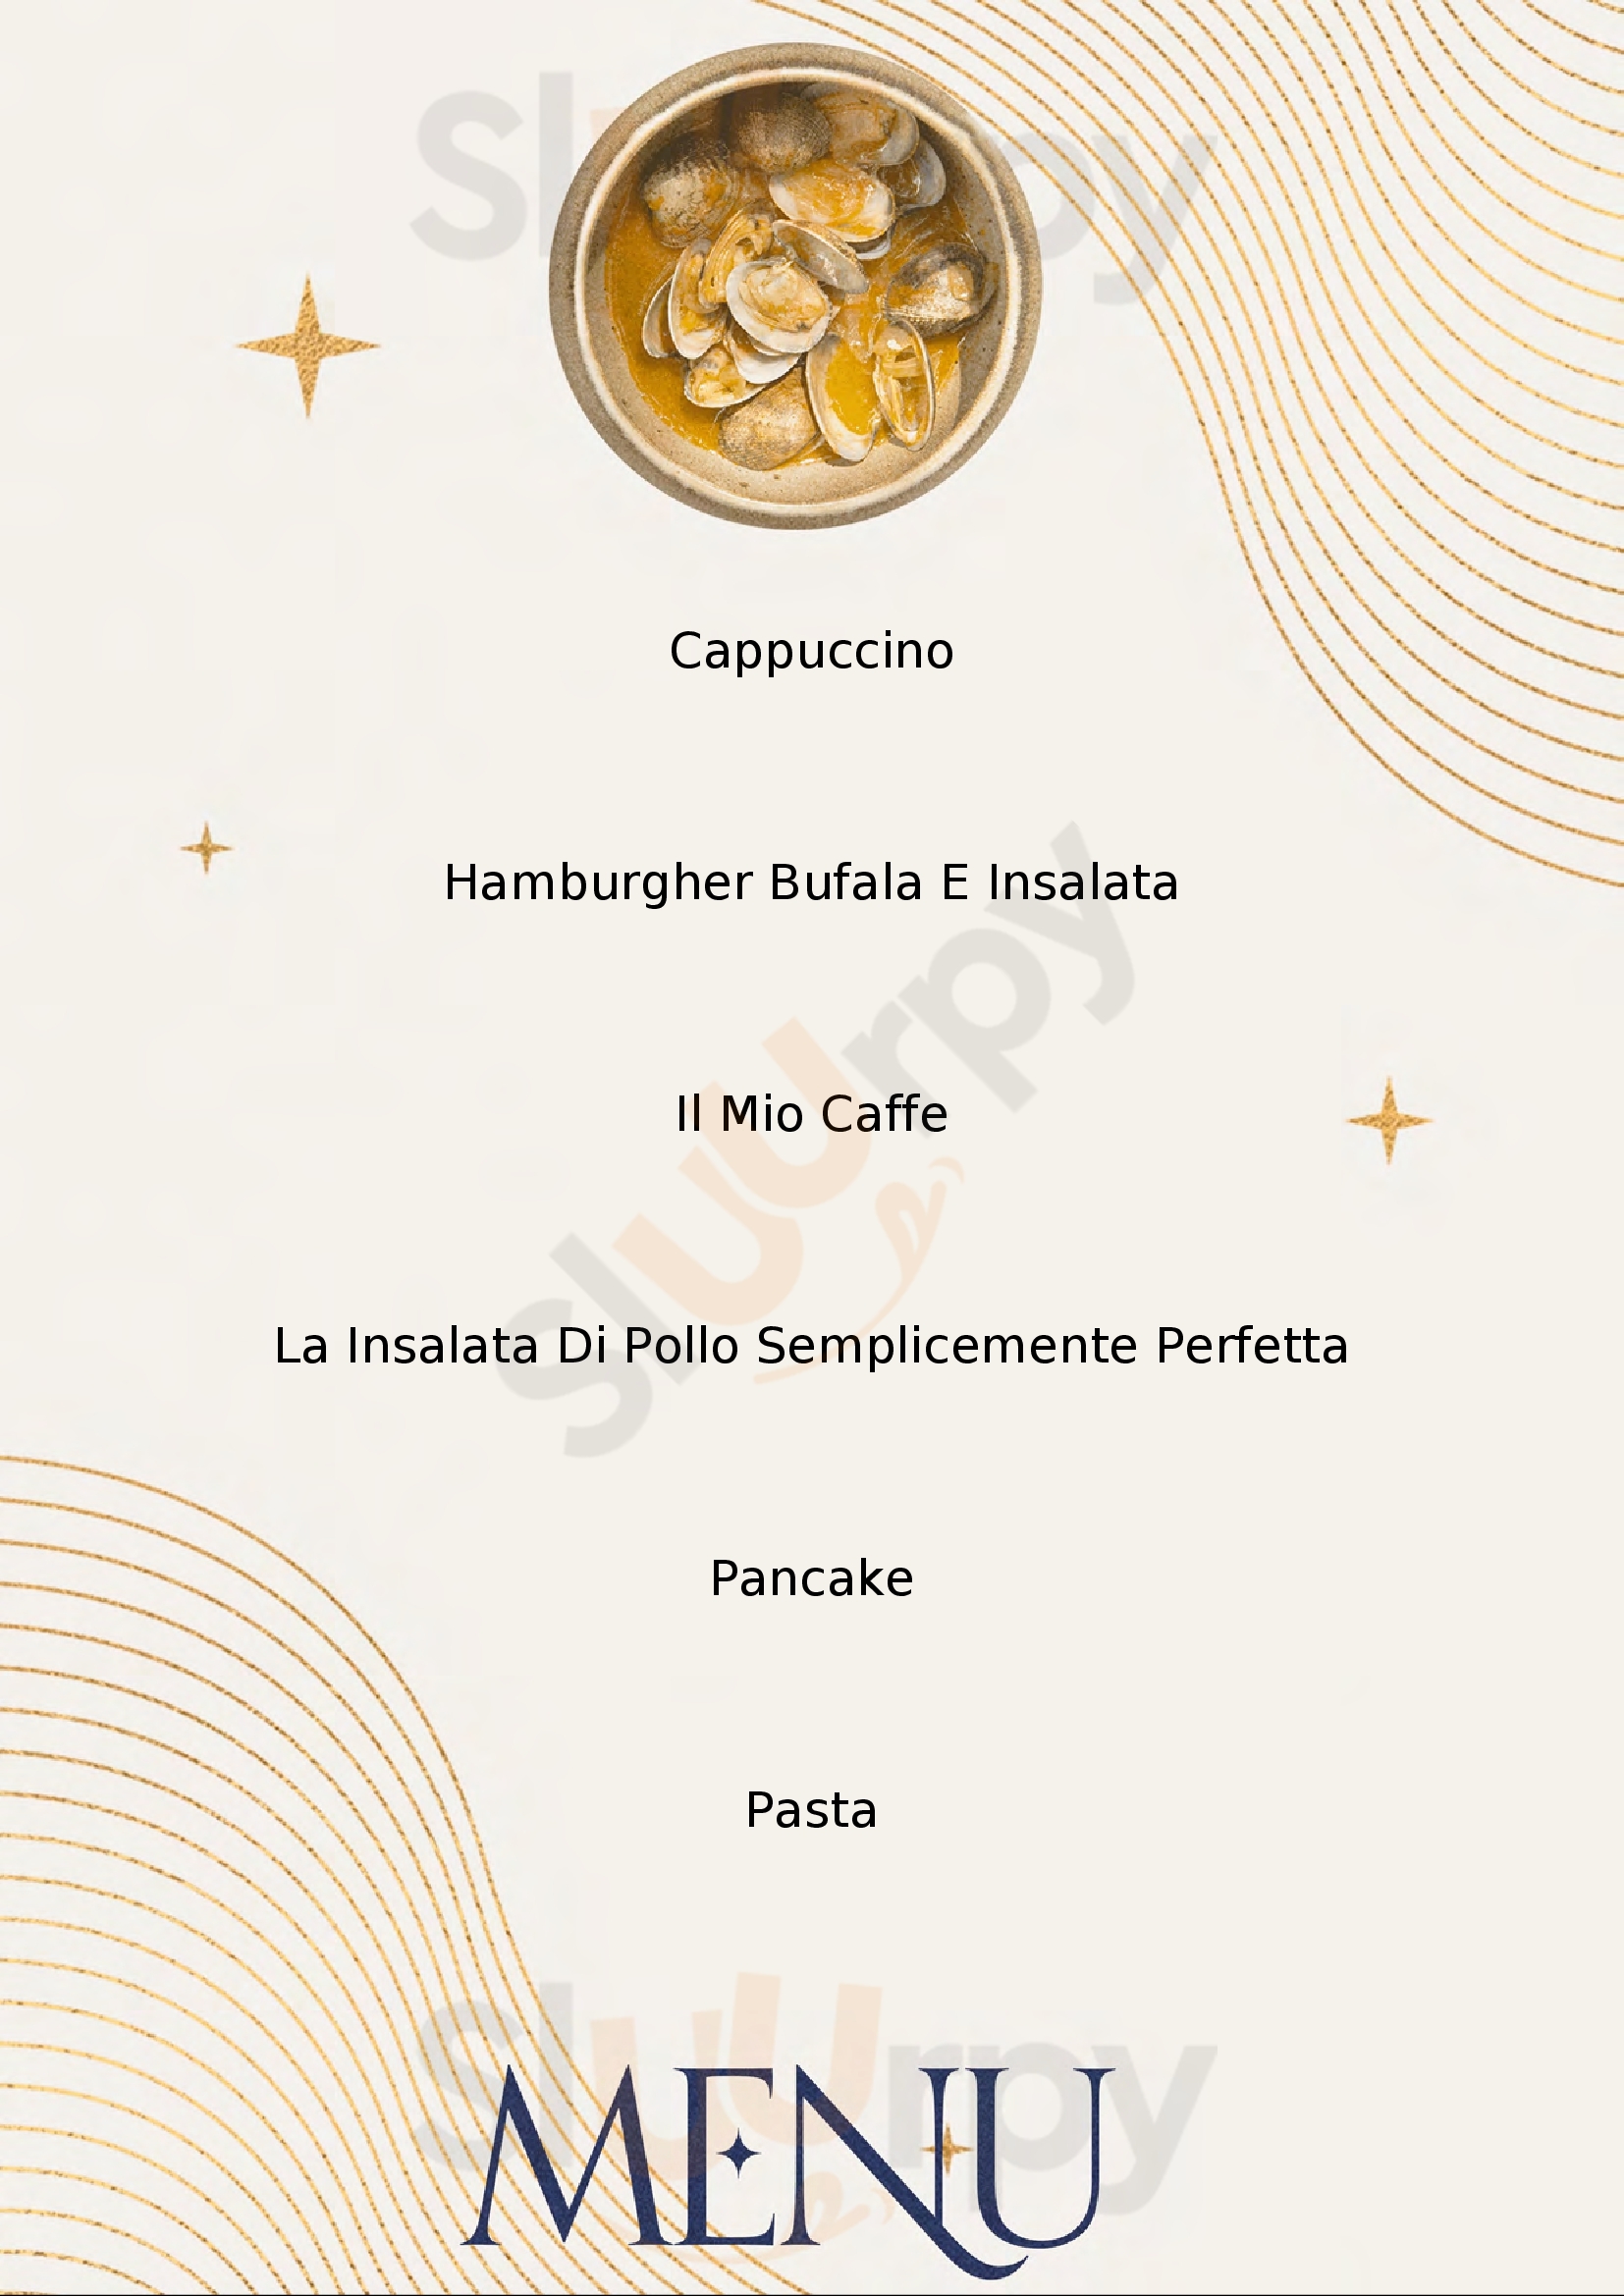 Caffè d'aMare Zadina Pineta menù 1 pagina